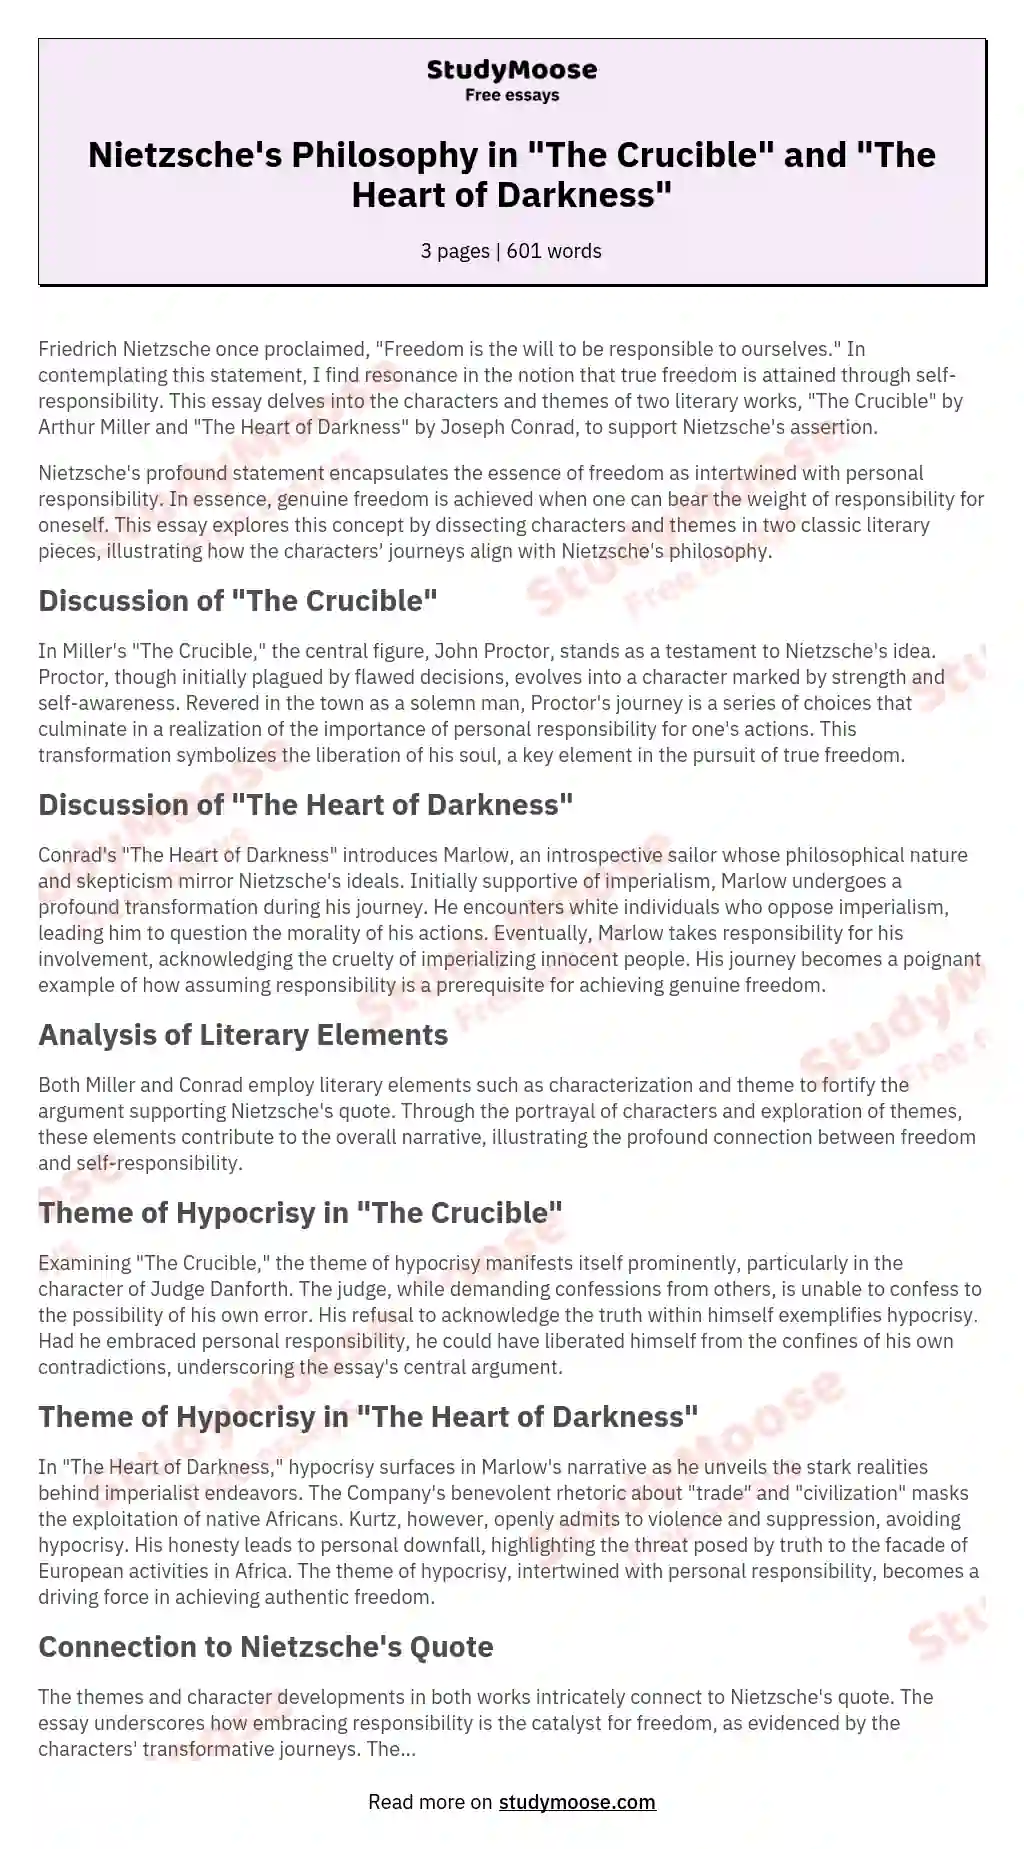 Nietzsche's Philosophy in "The Crucible" and "The Heart of Darkness" essay